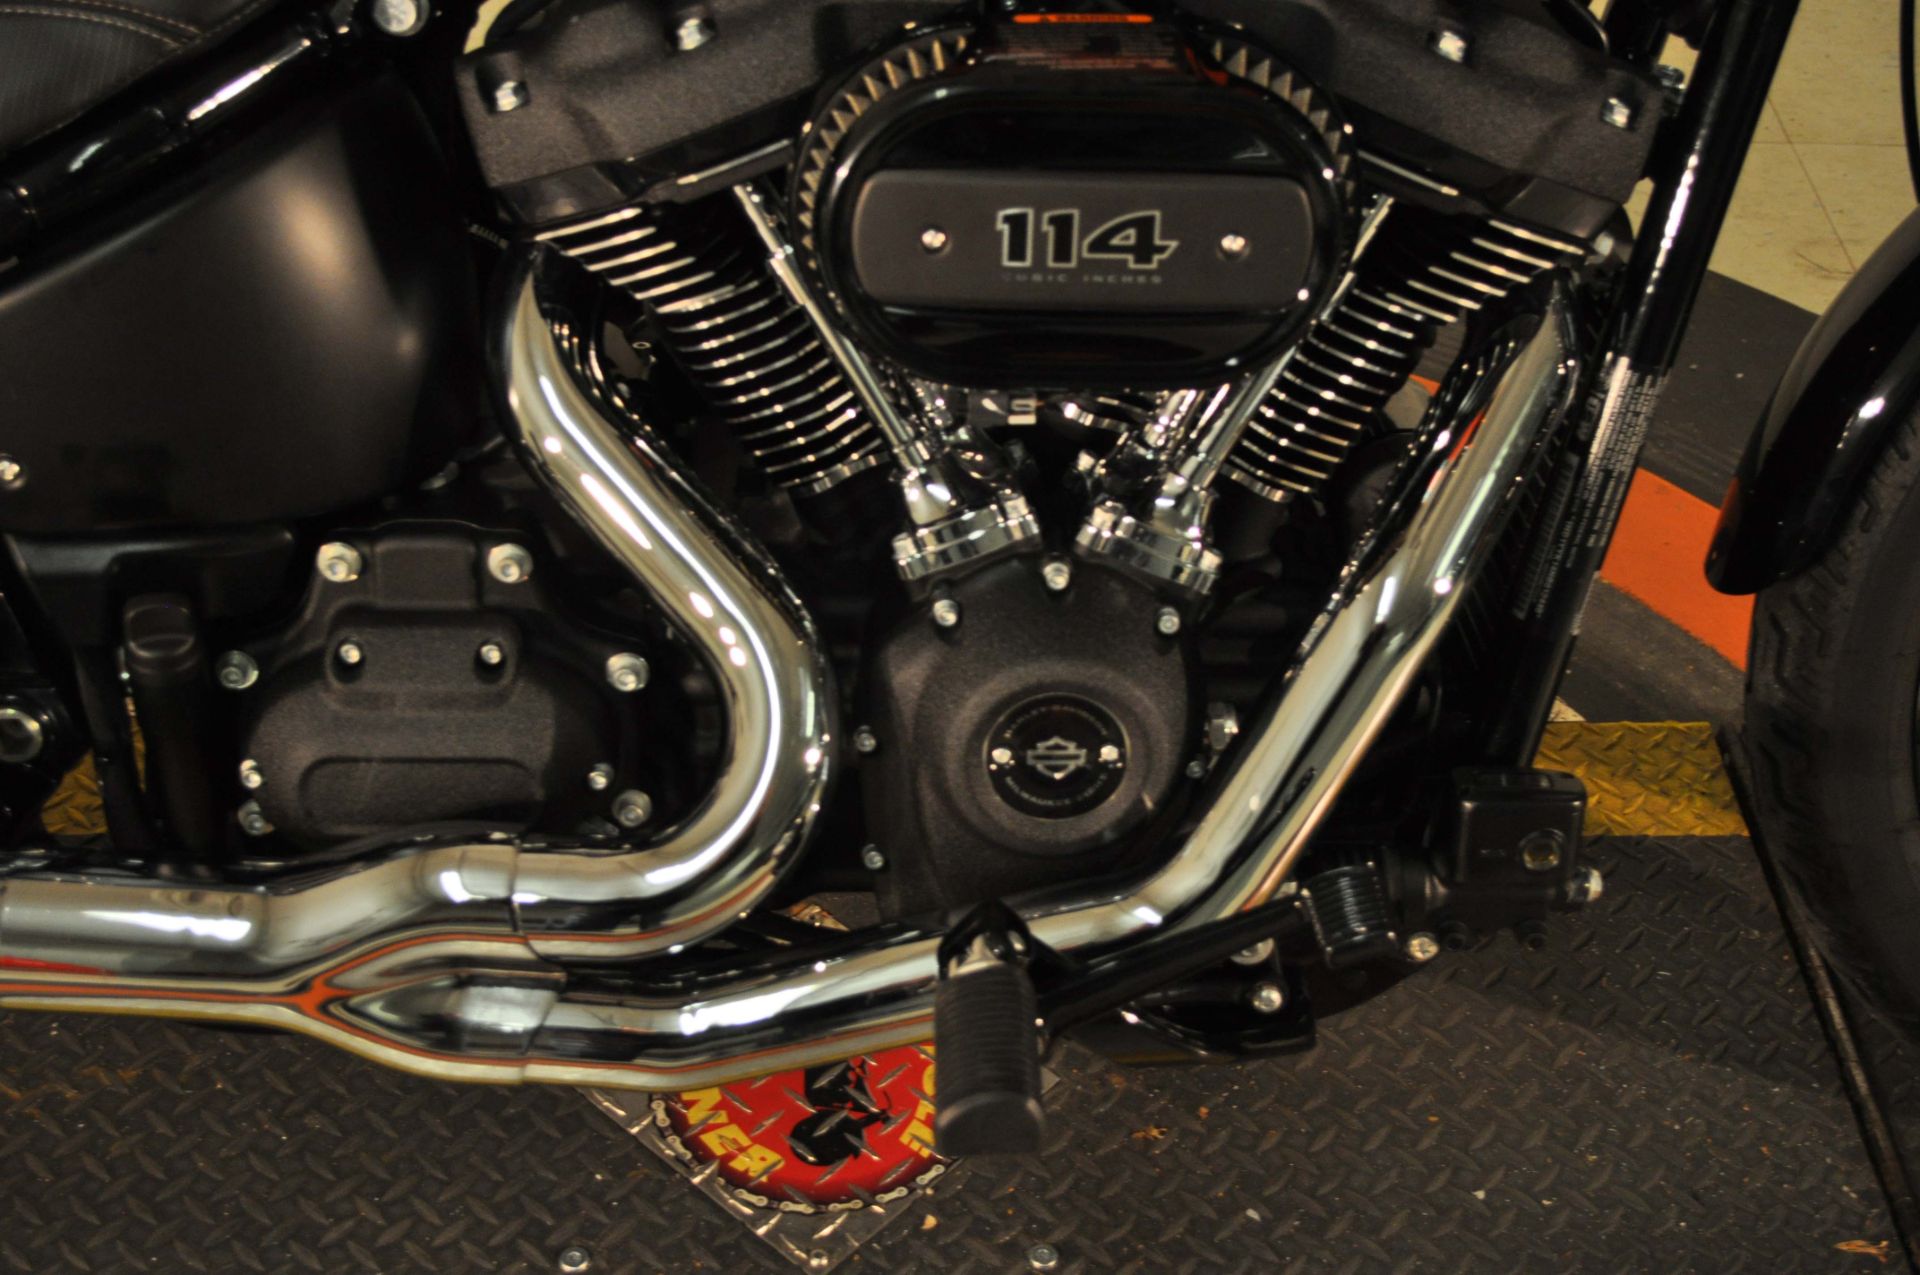 2022 Harley-Davidson Street Bob® 114 in Winston Salem, North Carolina - Photo 16